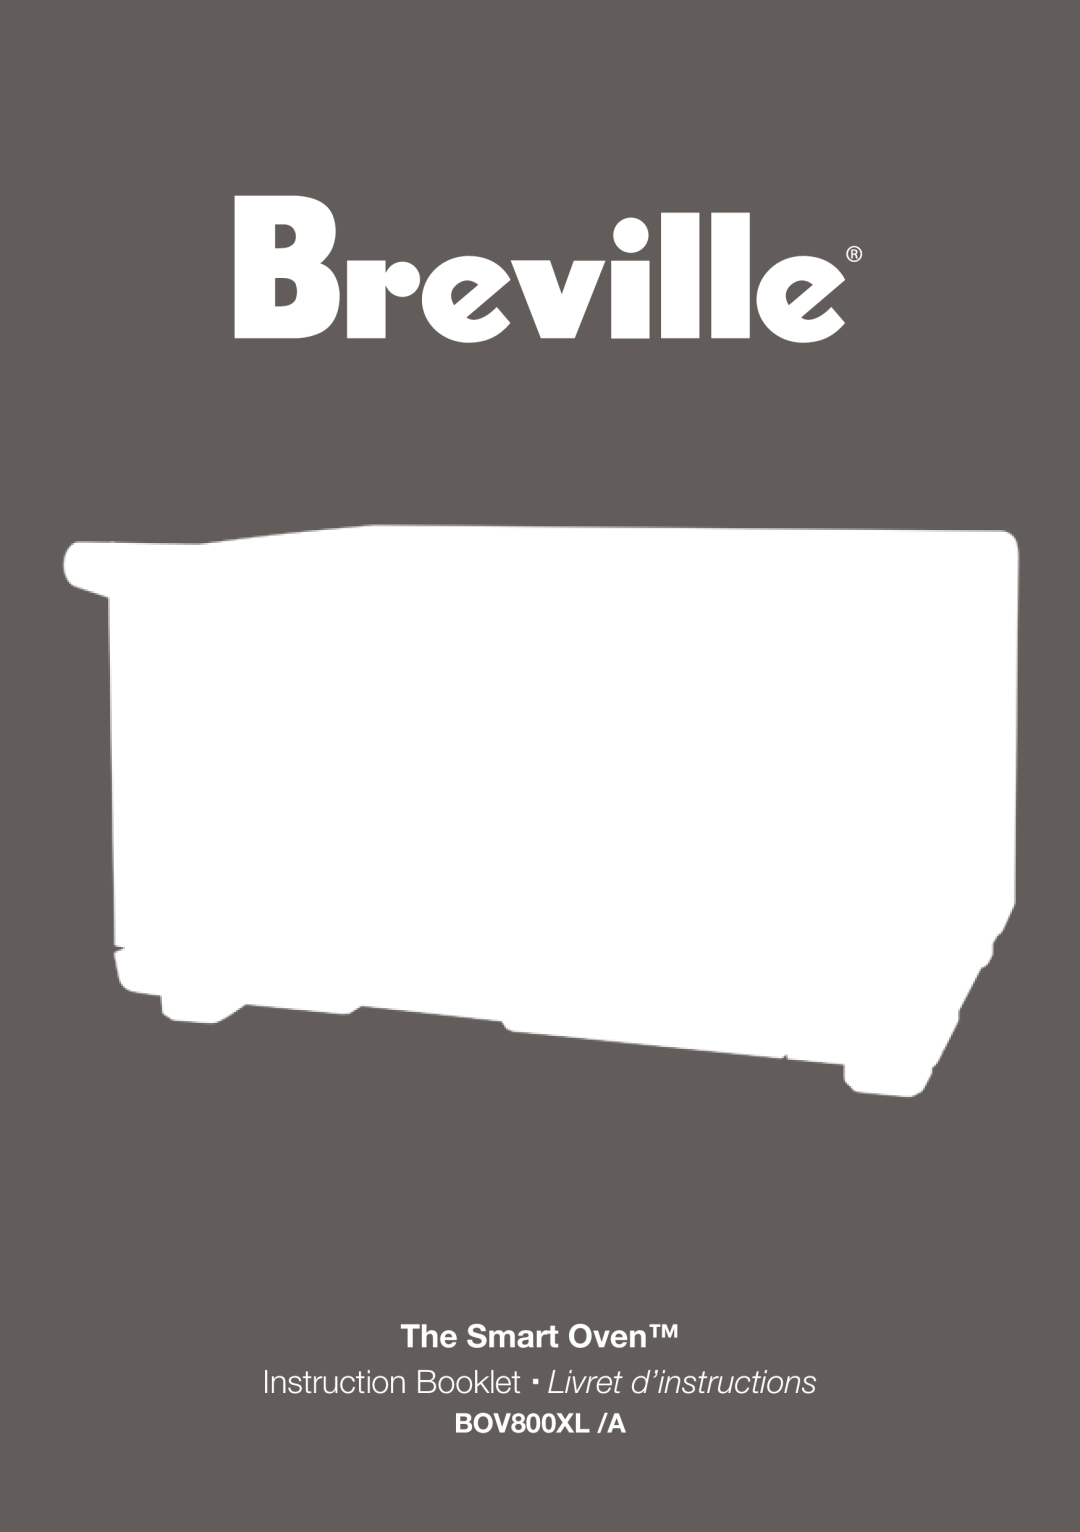 Breville BOV800XL /A manual The Smart Oven, Instruction Booklet Livret d’instructions 